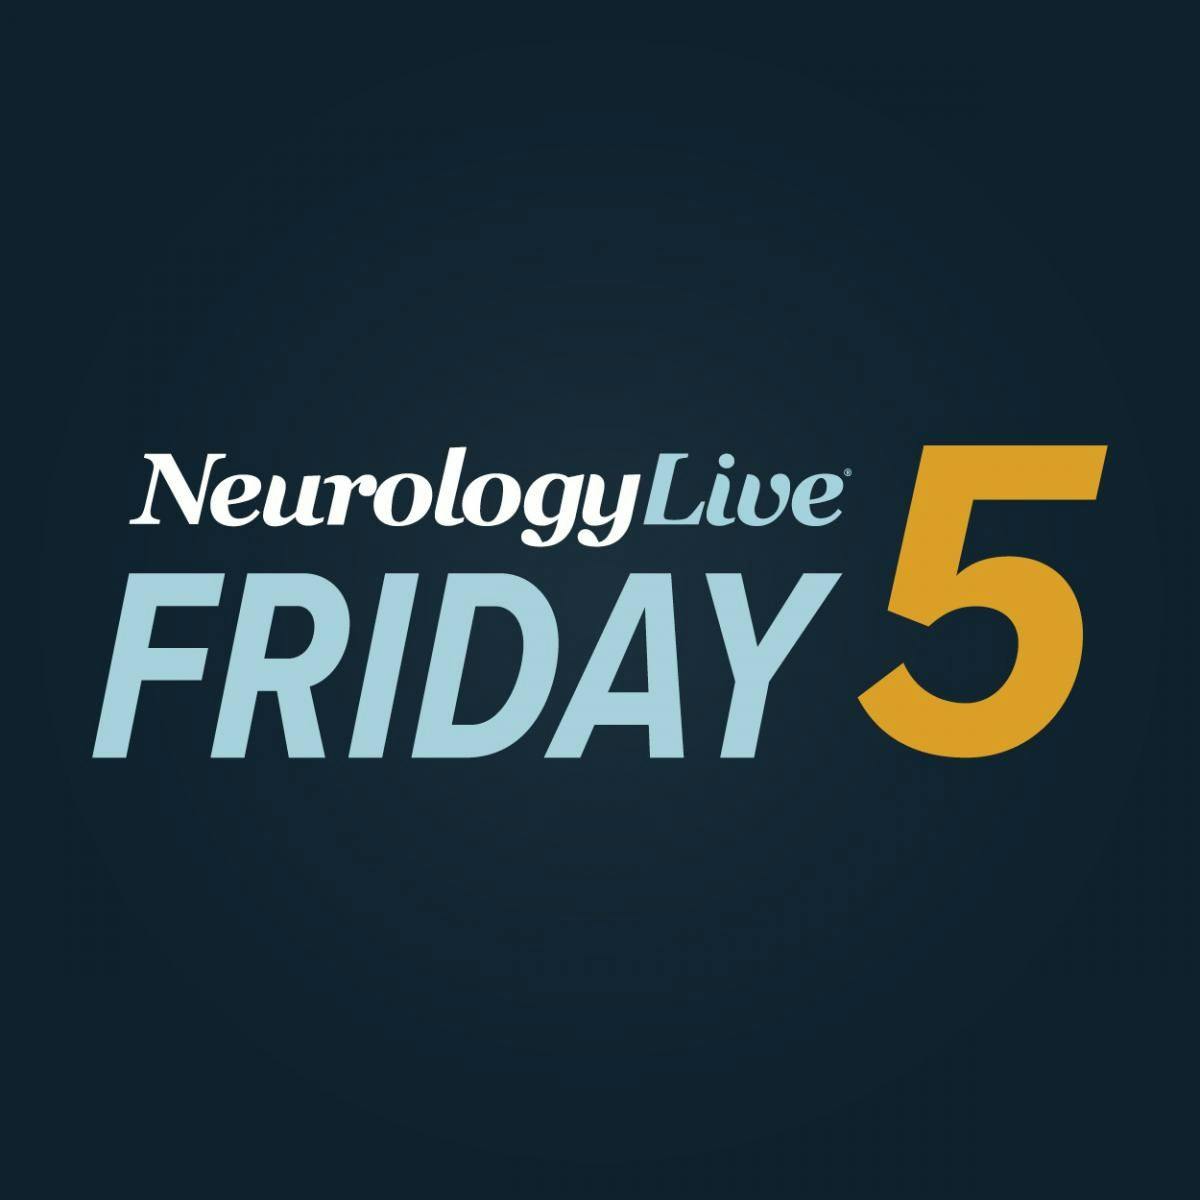 NeurologyLive Friday 5 &mdash; May 8, 2020